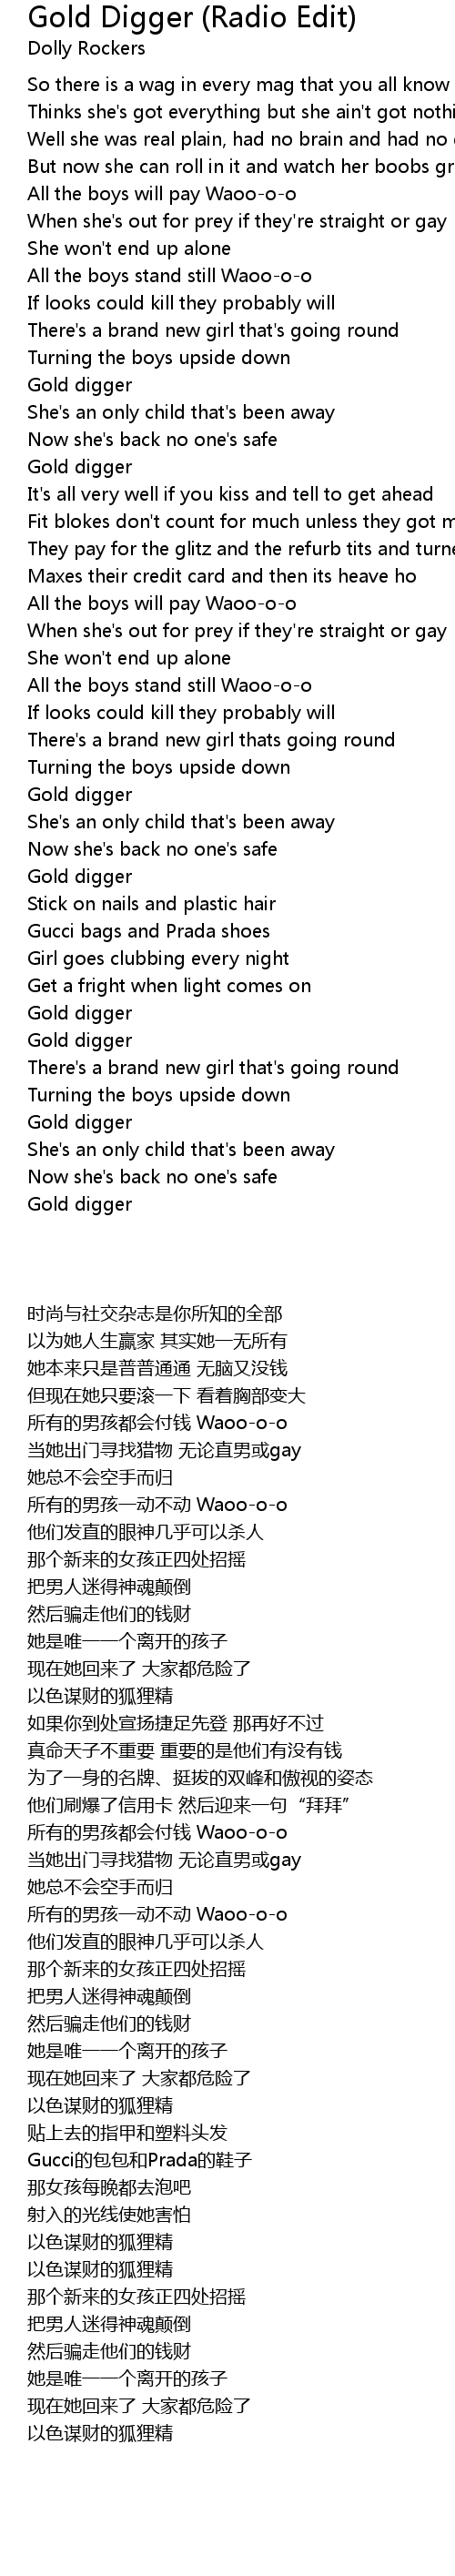 Gold Digger (Radio Edit) Lyrics - Follow Lyrics